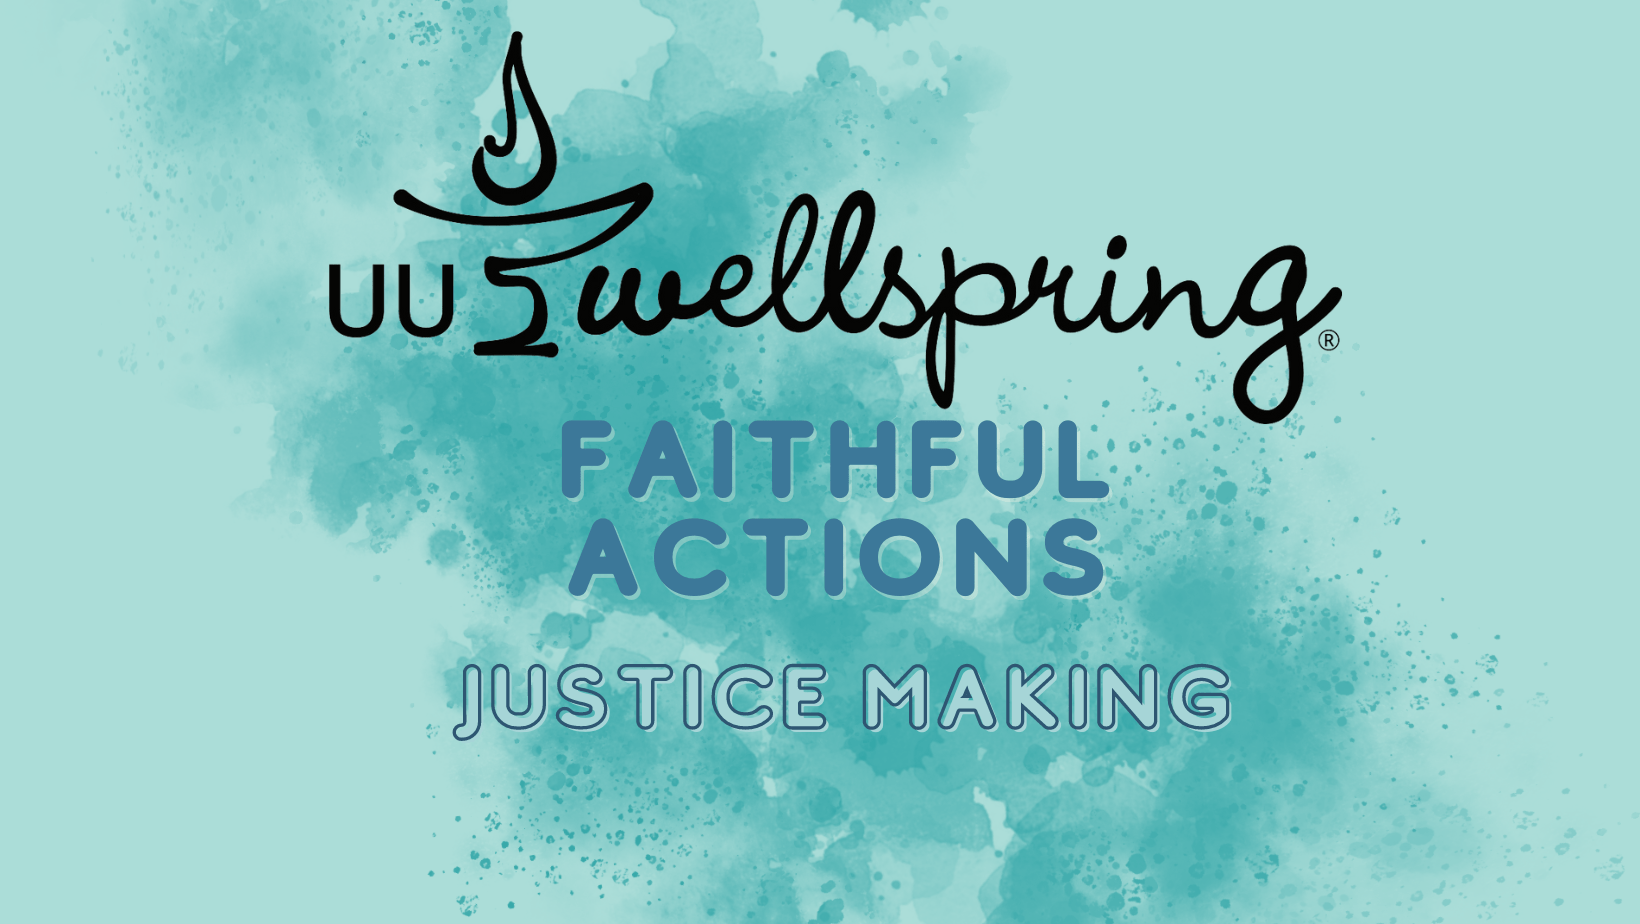 UU Wellspring Faithful Actions